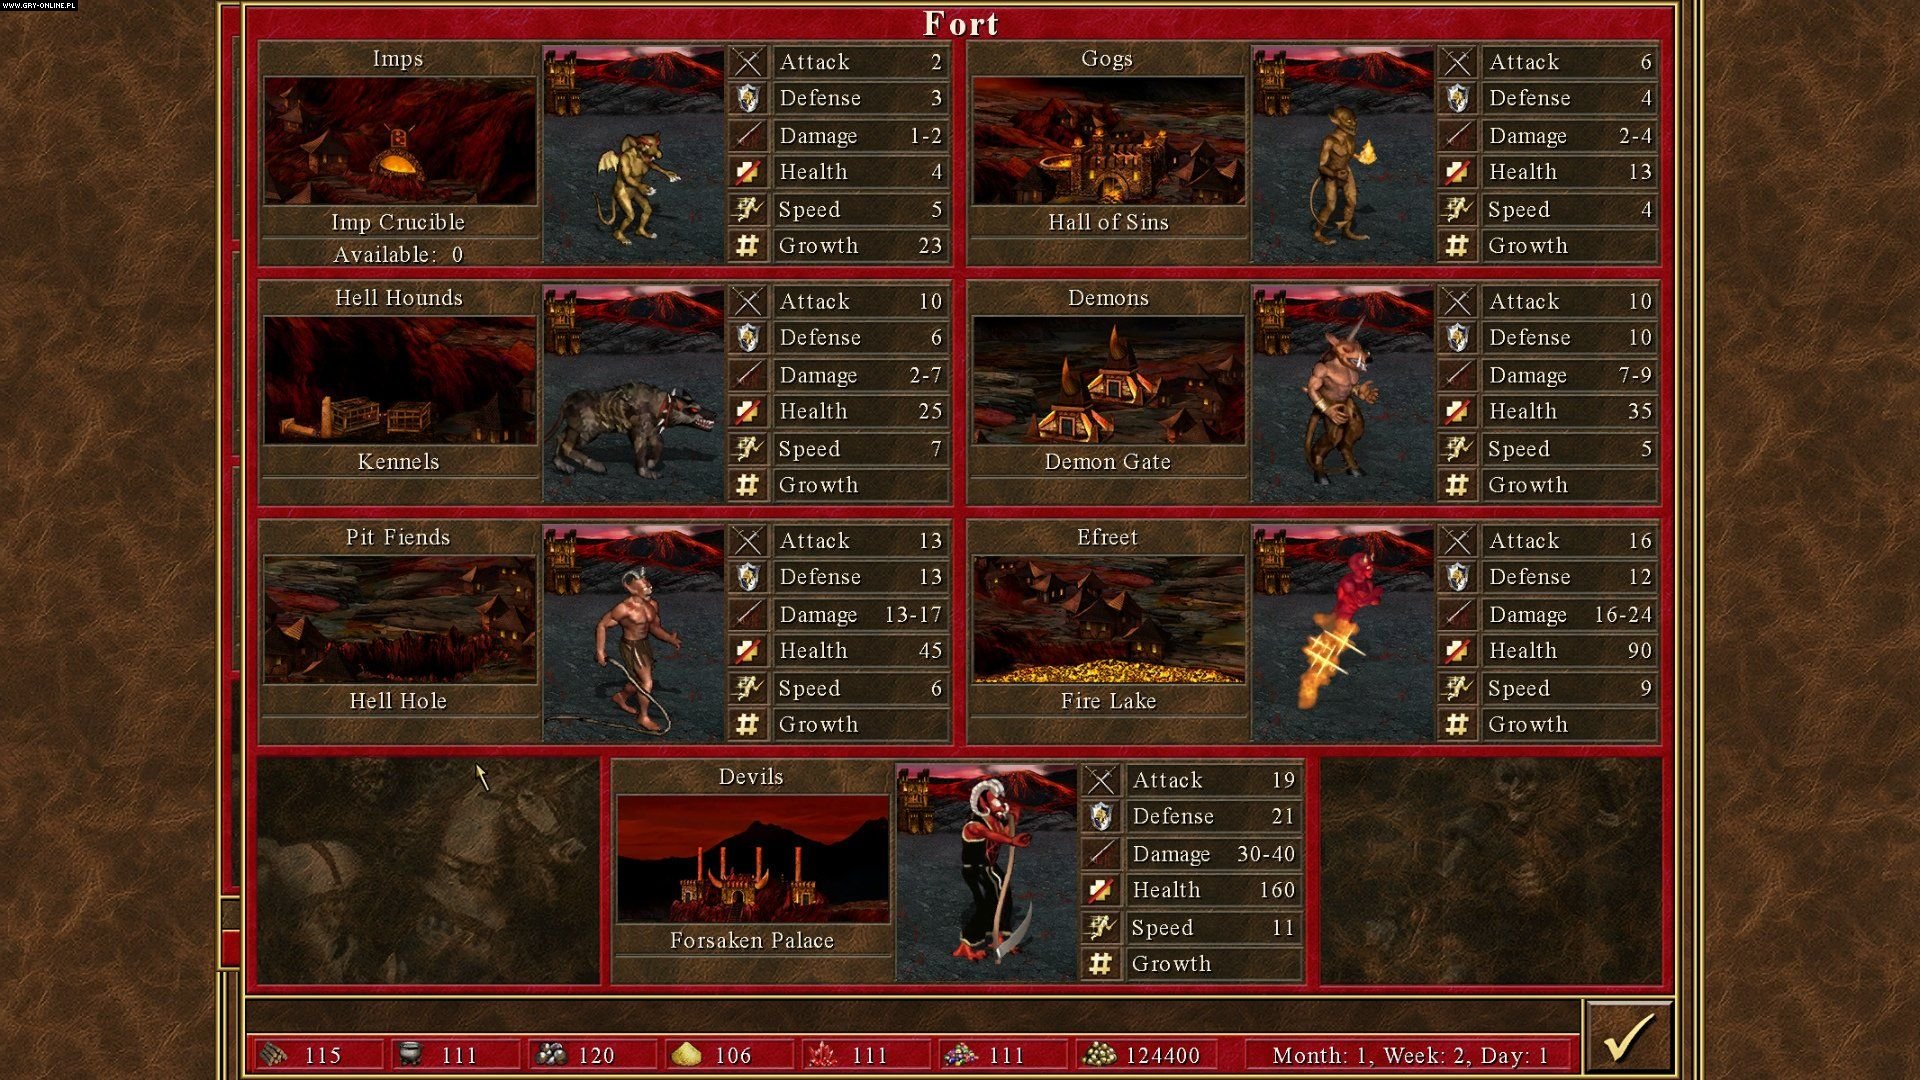 Heroes of Might and Magic III: Złota Edycja - gry